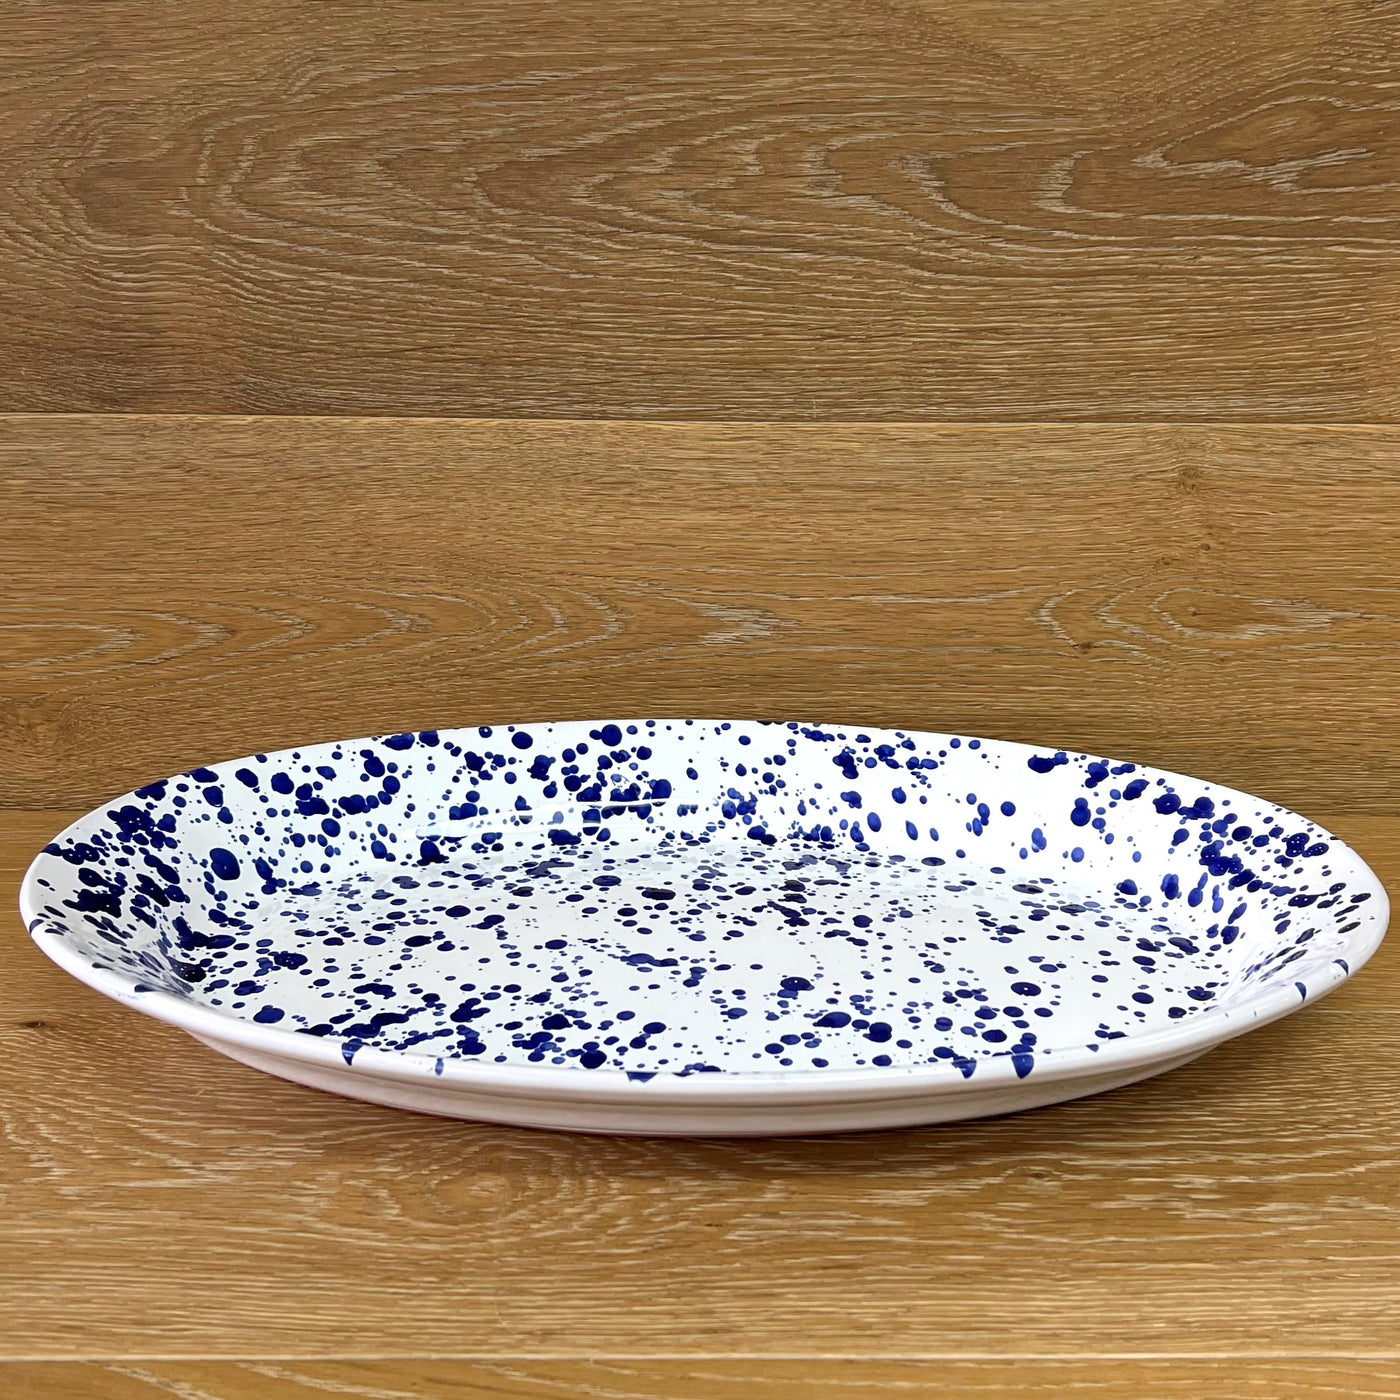 Blue Oval Platter 48cm (Instore Only)